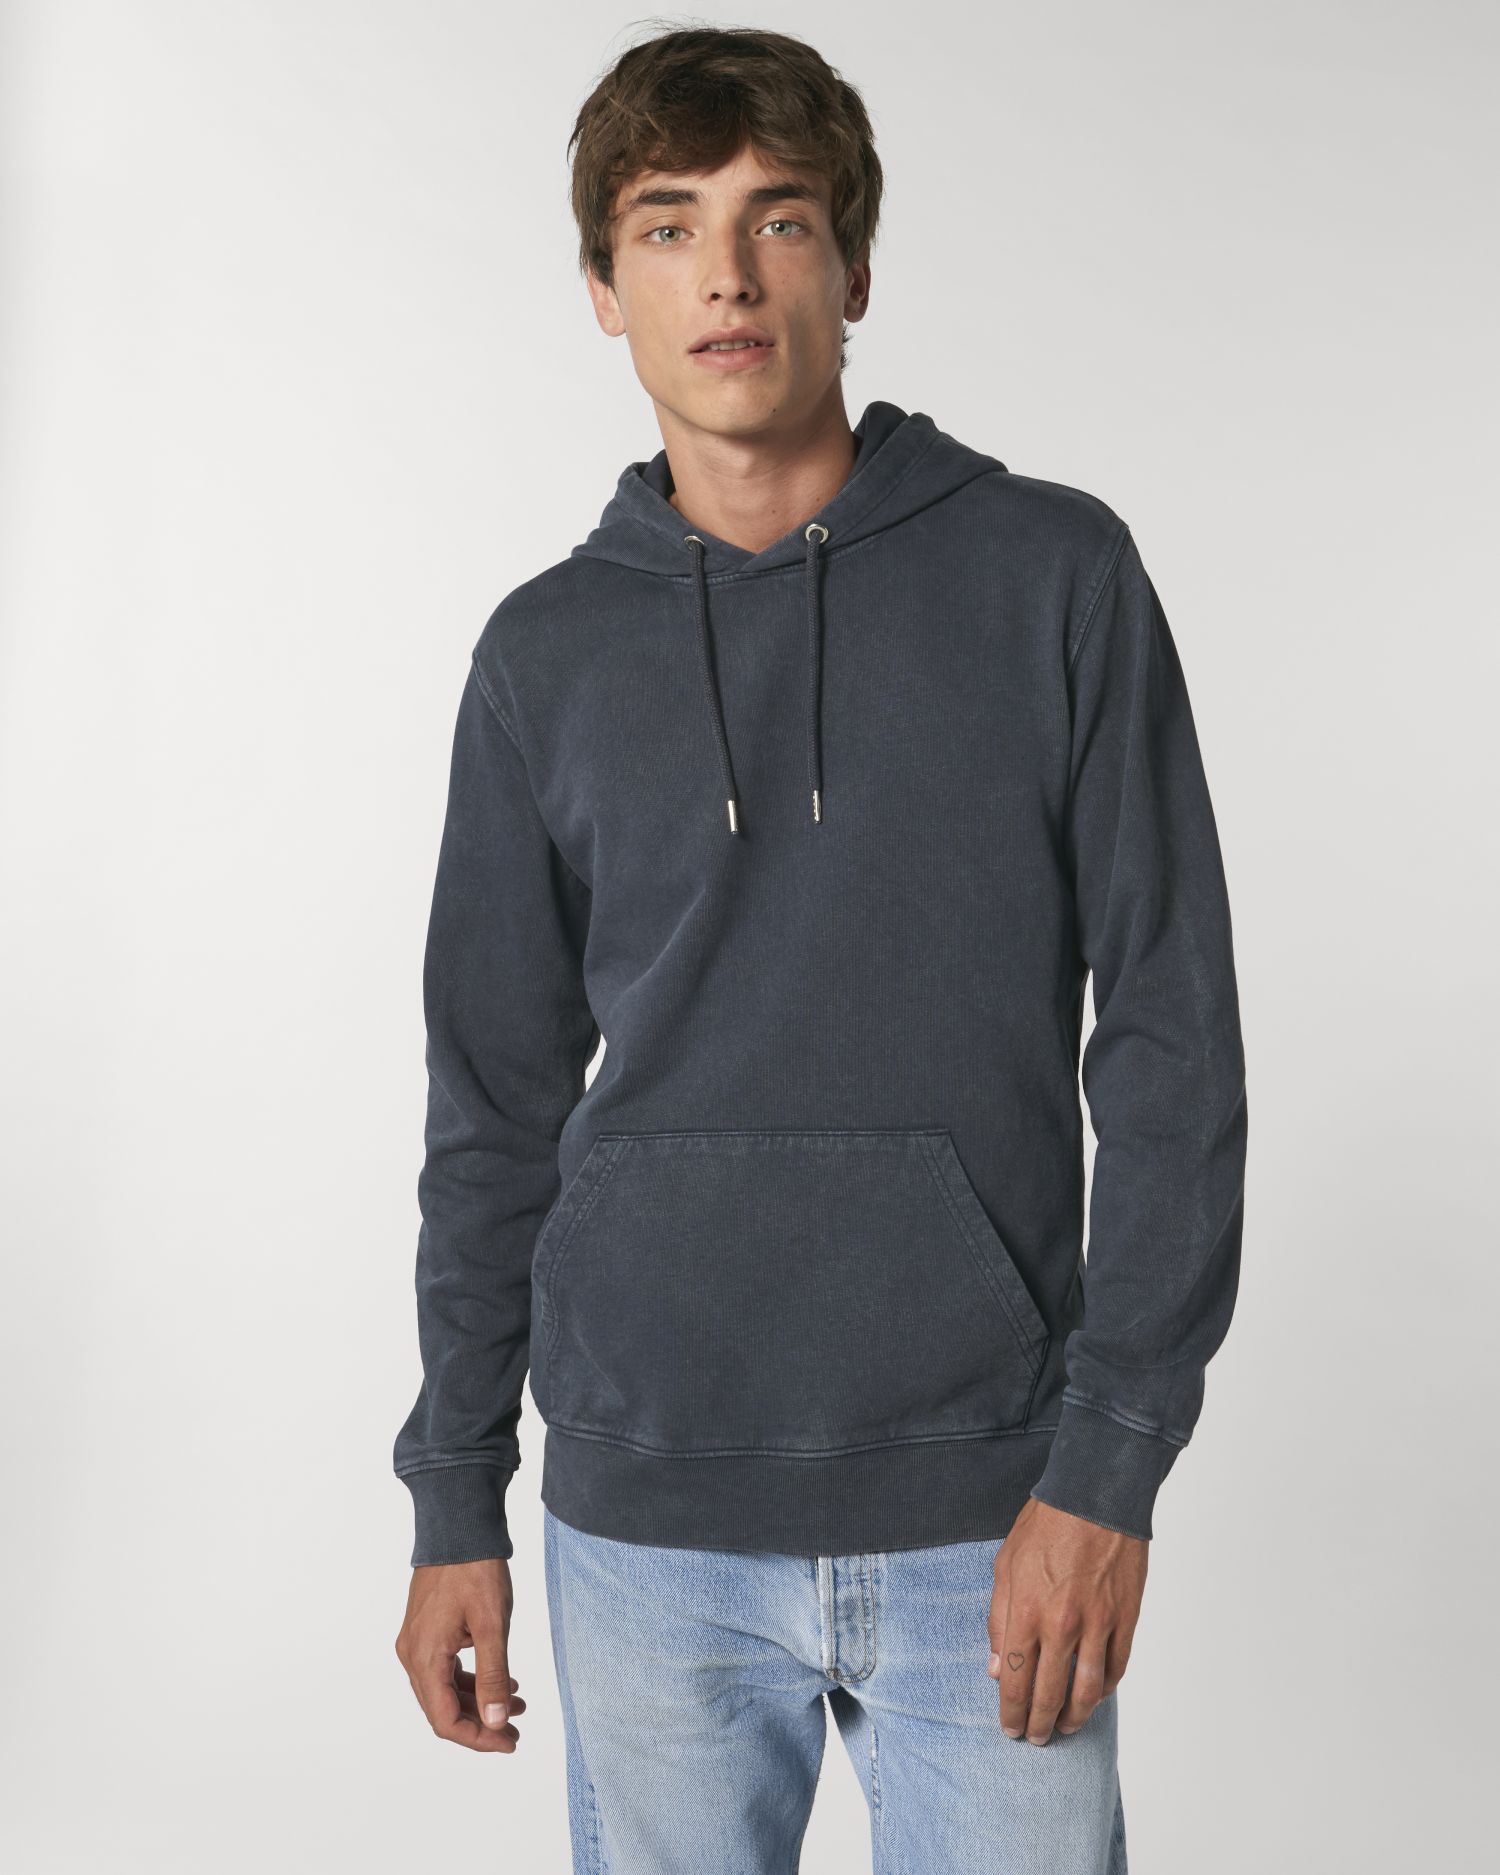 Unisex Hoodie sweatshirts G. Dyed Aged Rose Clay XL